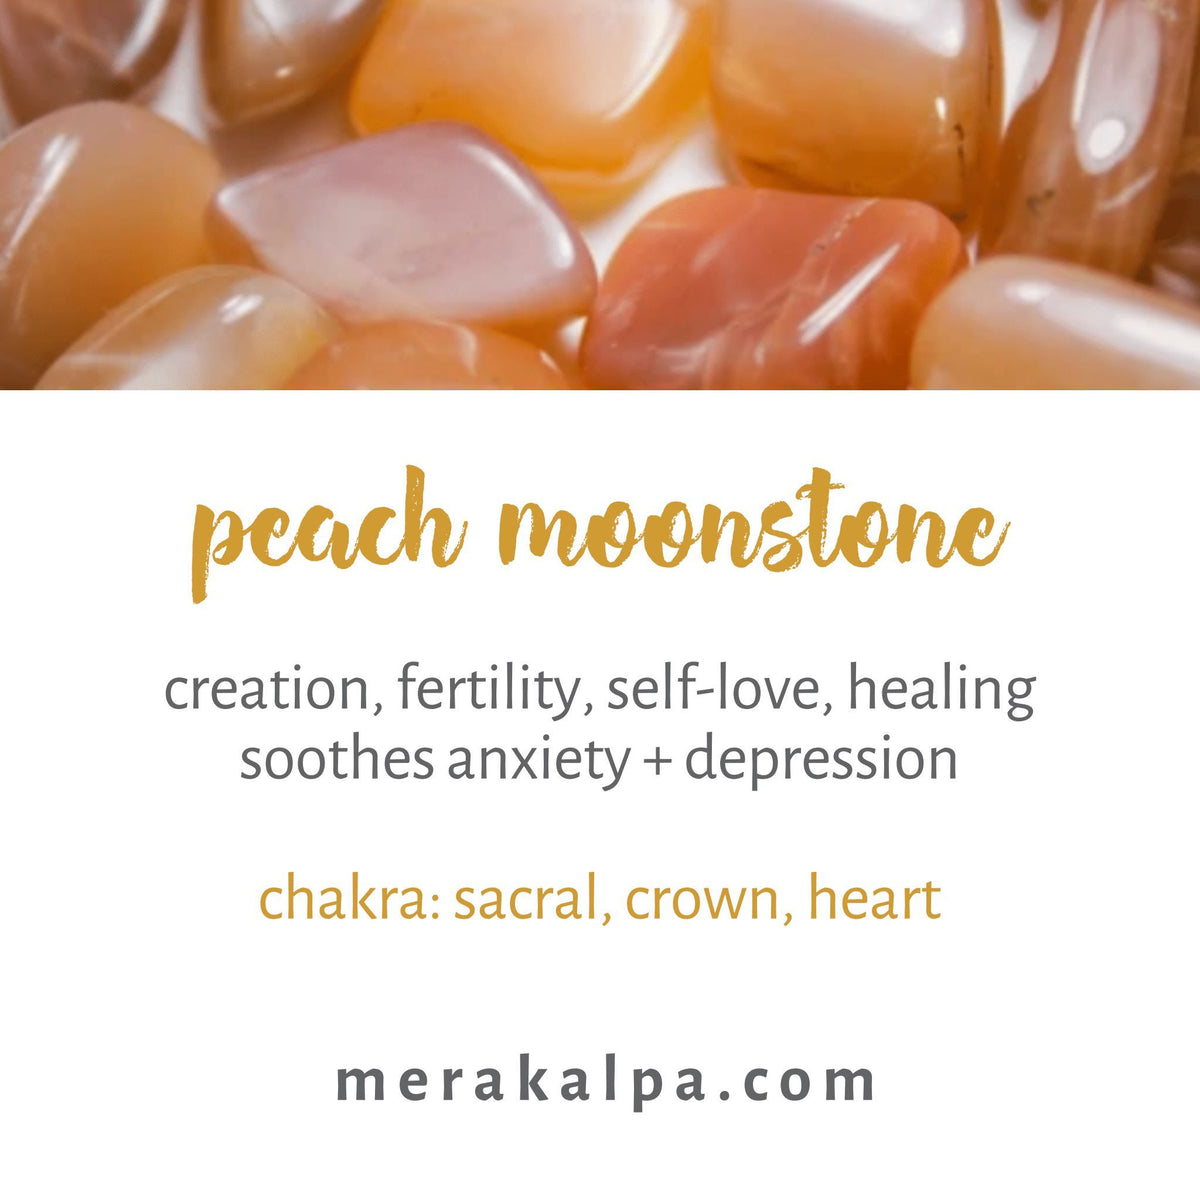 Peach Moonstone Stretch Bracelet